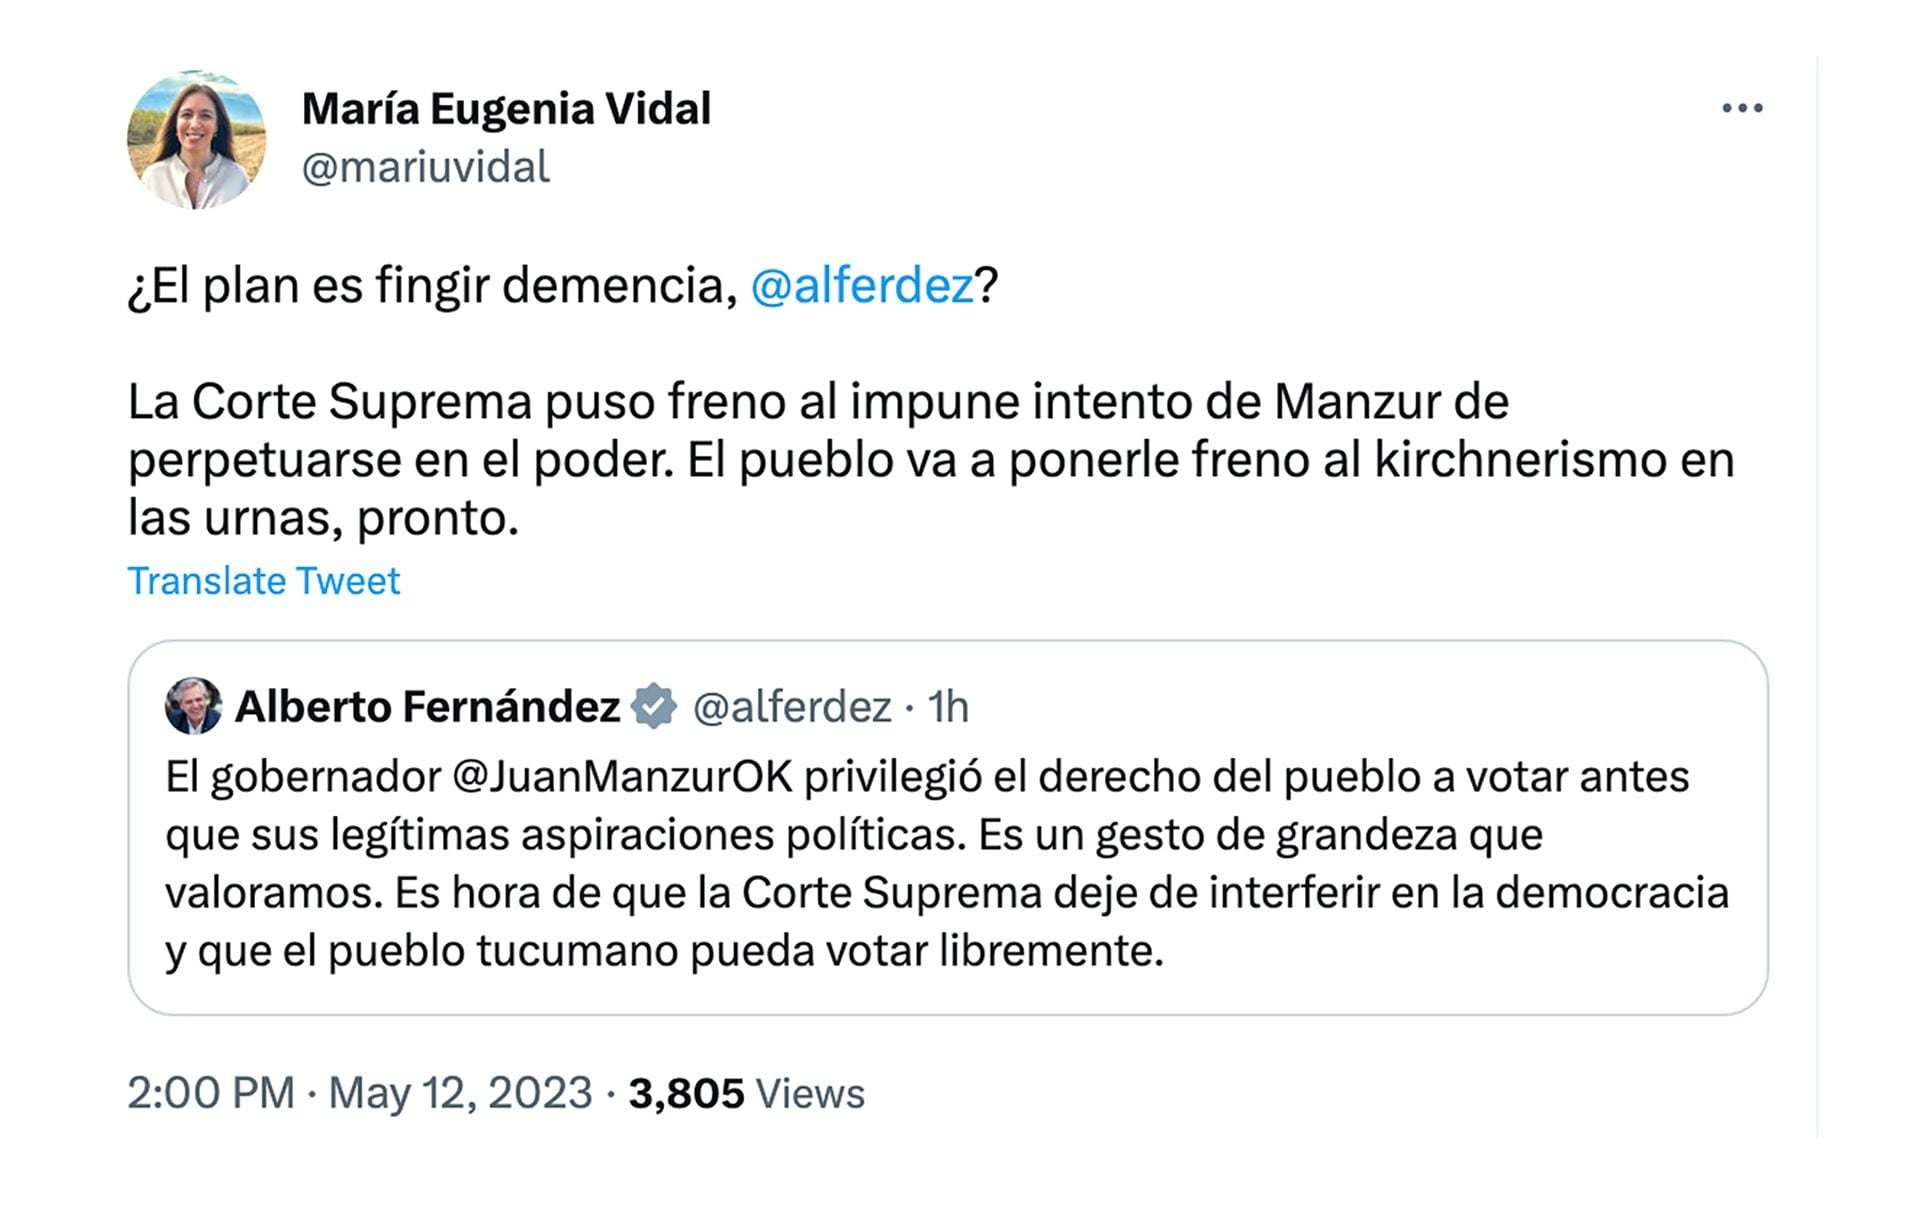 María Eugenia Vidal cuestionó a Alberto Fernández por apoyar a Manzur